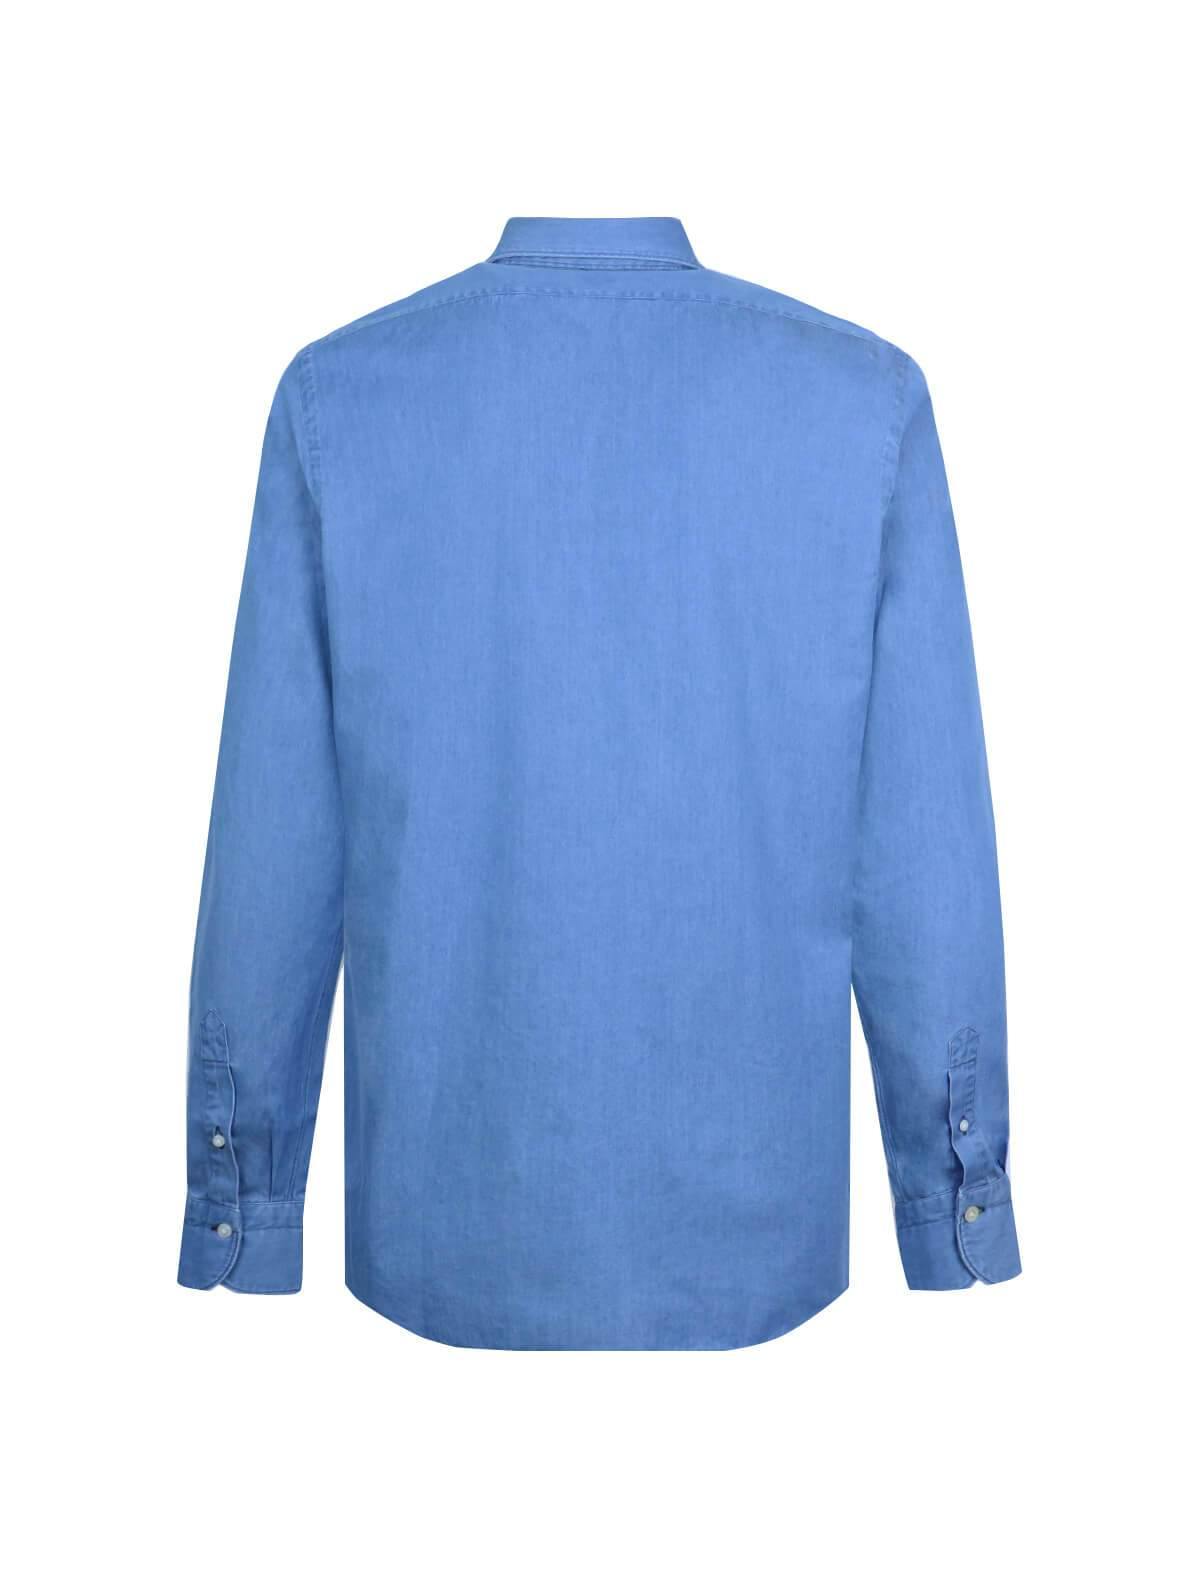 FINAMORE 1925 Tokyo Slim Fit Cotton Shirt in Light Blue | CLOSET Singapore